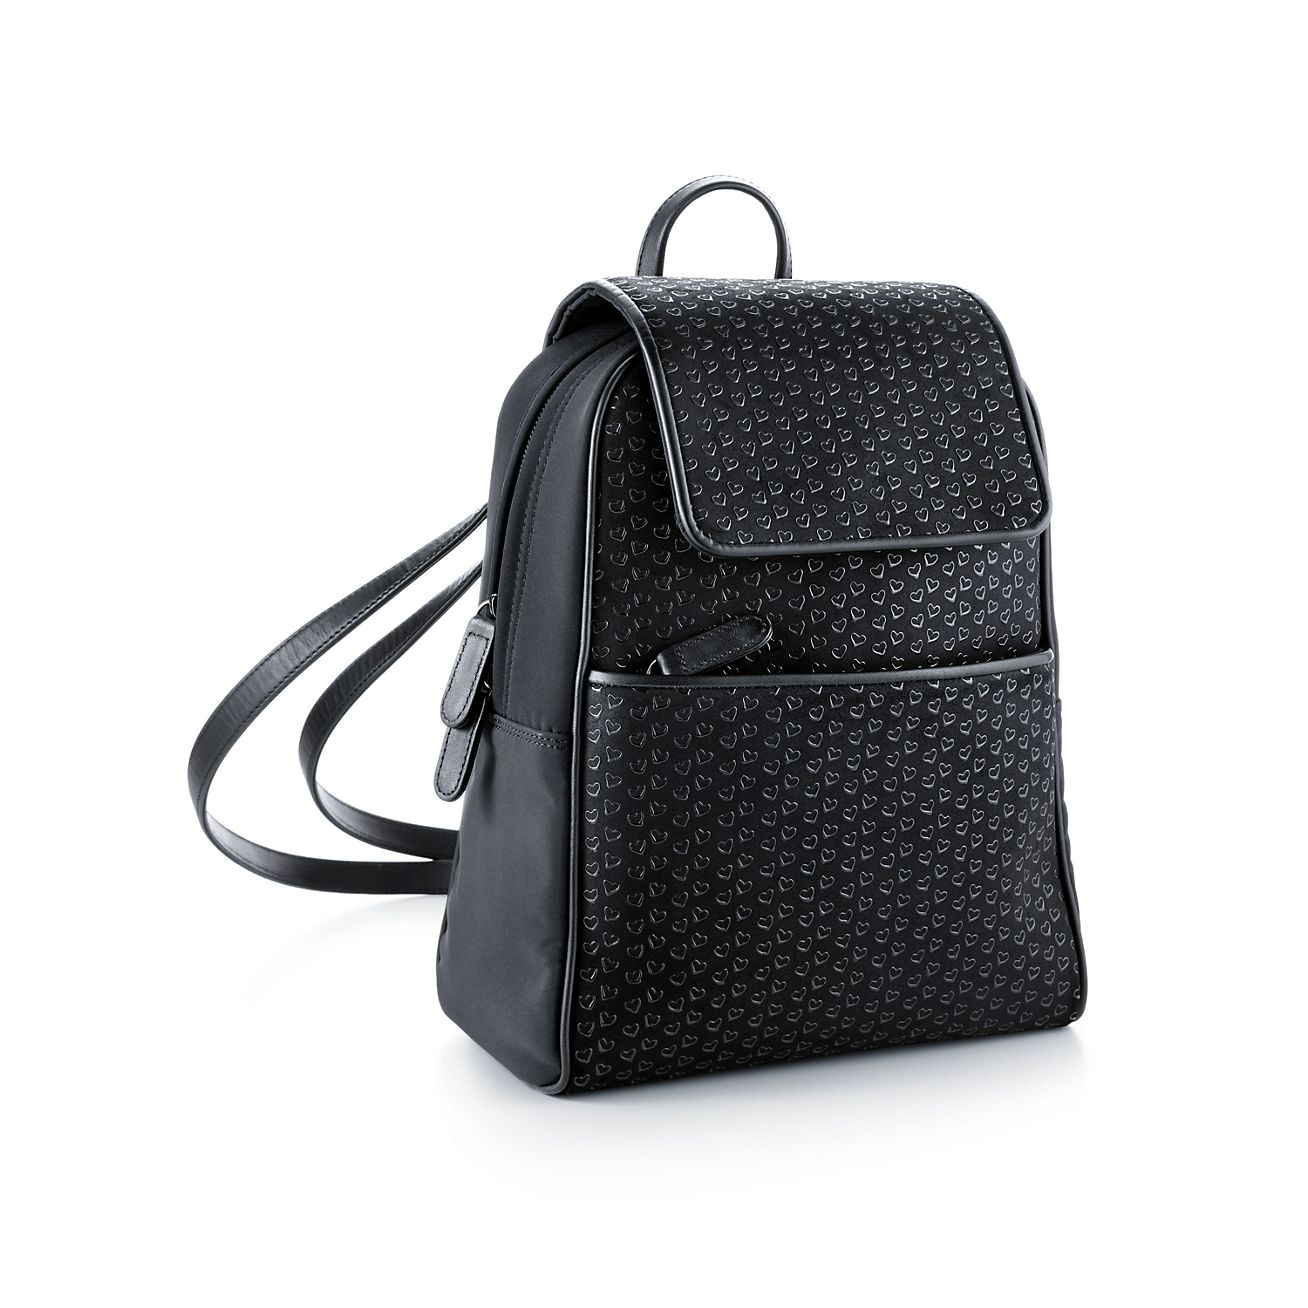 Elsa Peretti® backpack in black leather 